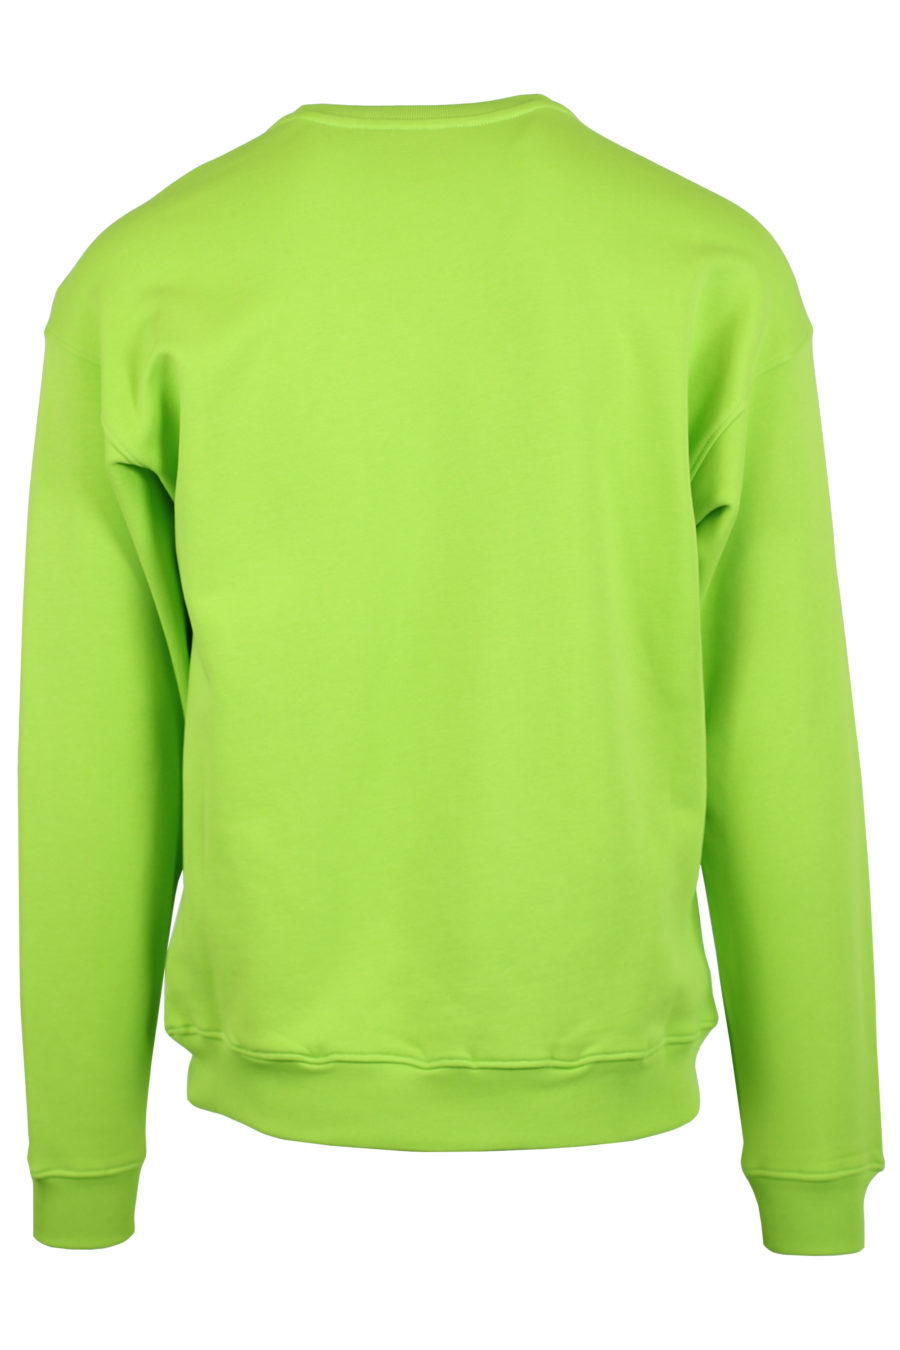 Sweat vert Fluor avec grand logo - IMG 0907